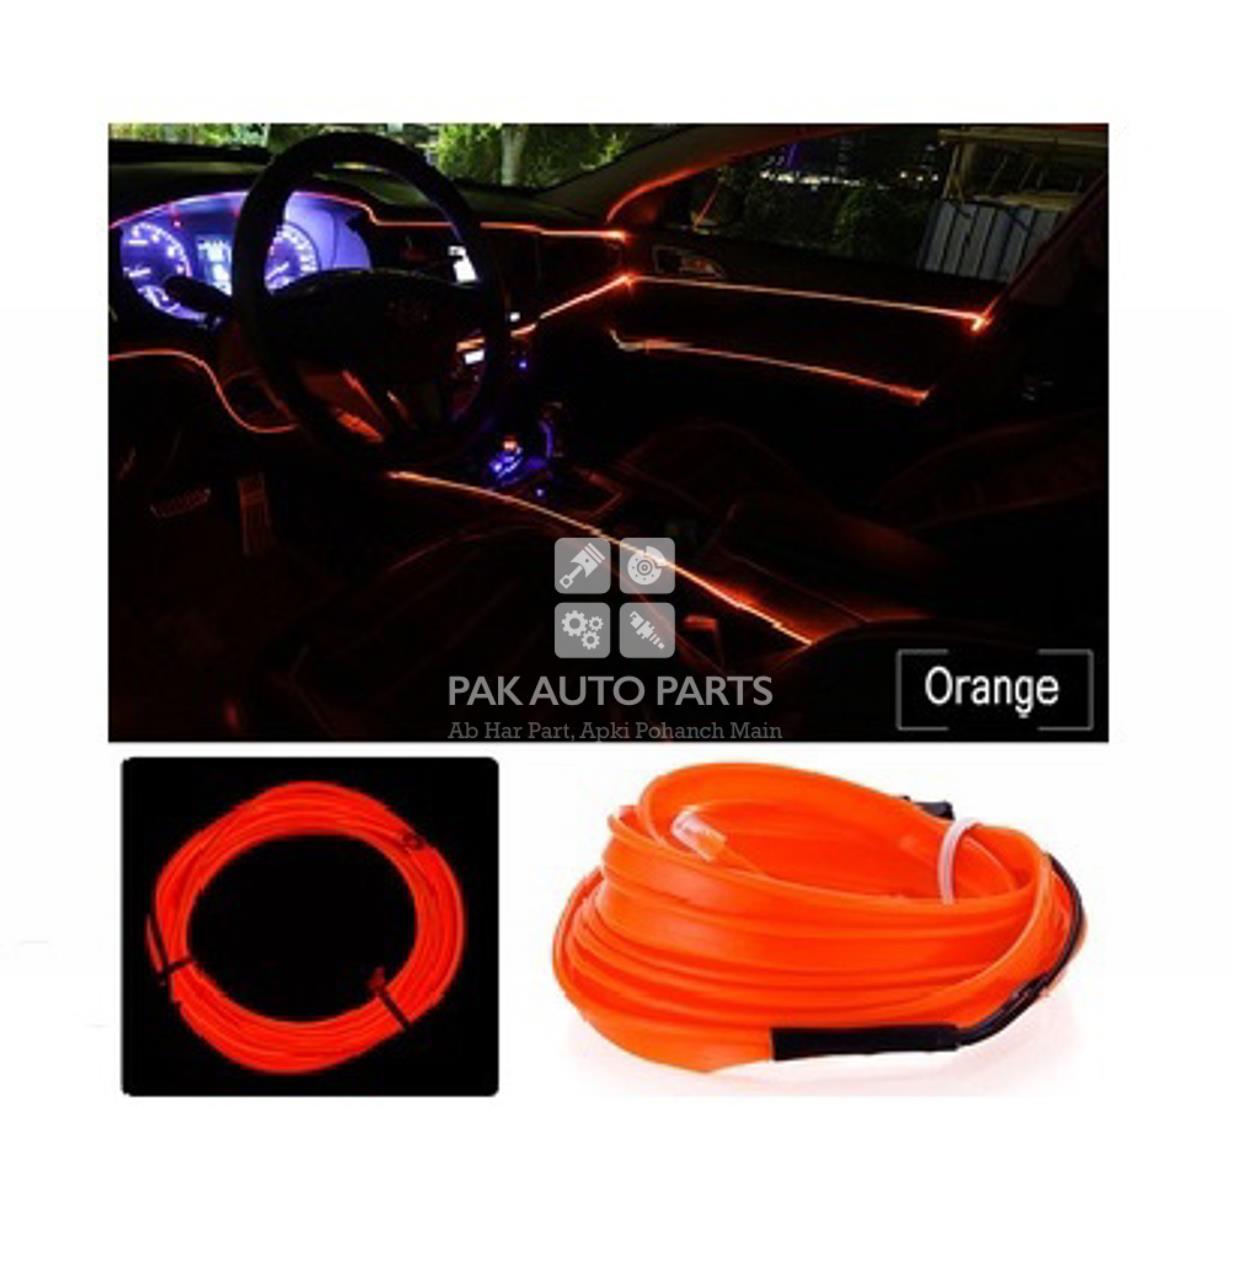 Picture of Dashboard Neon Light Orange